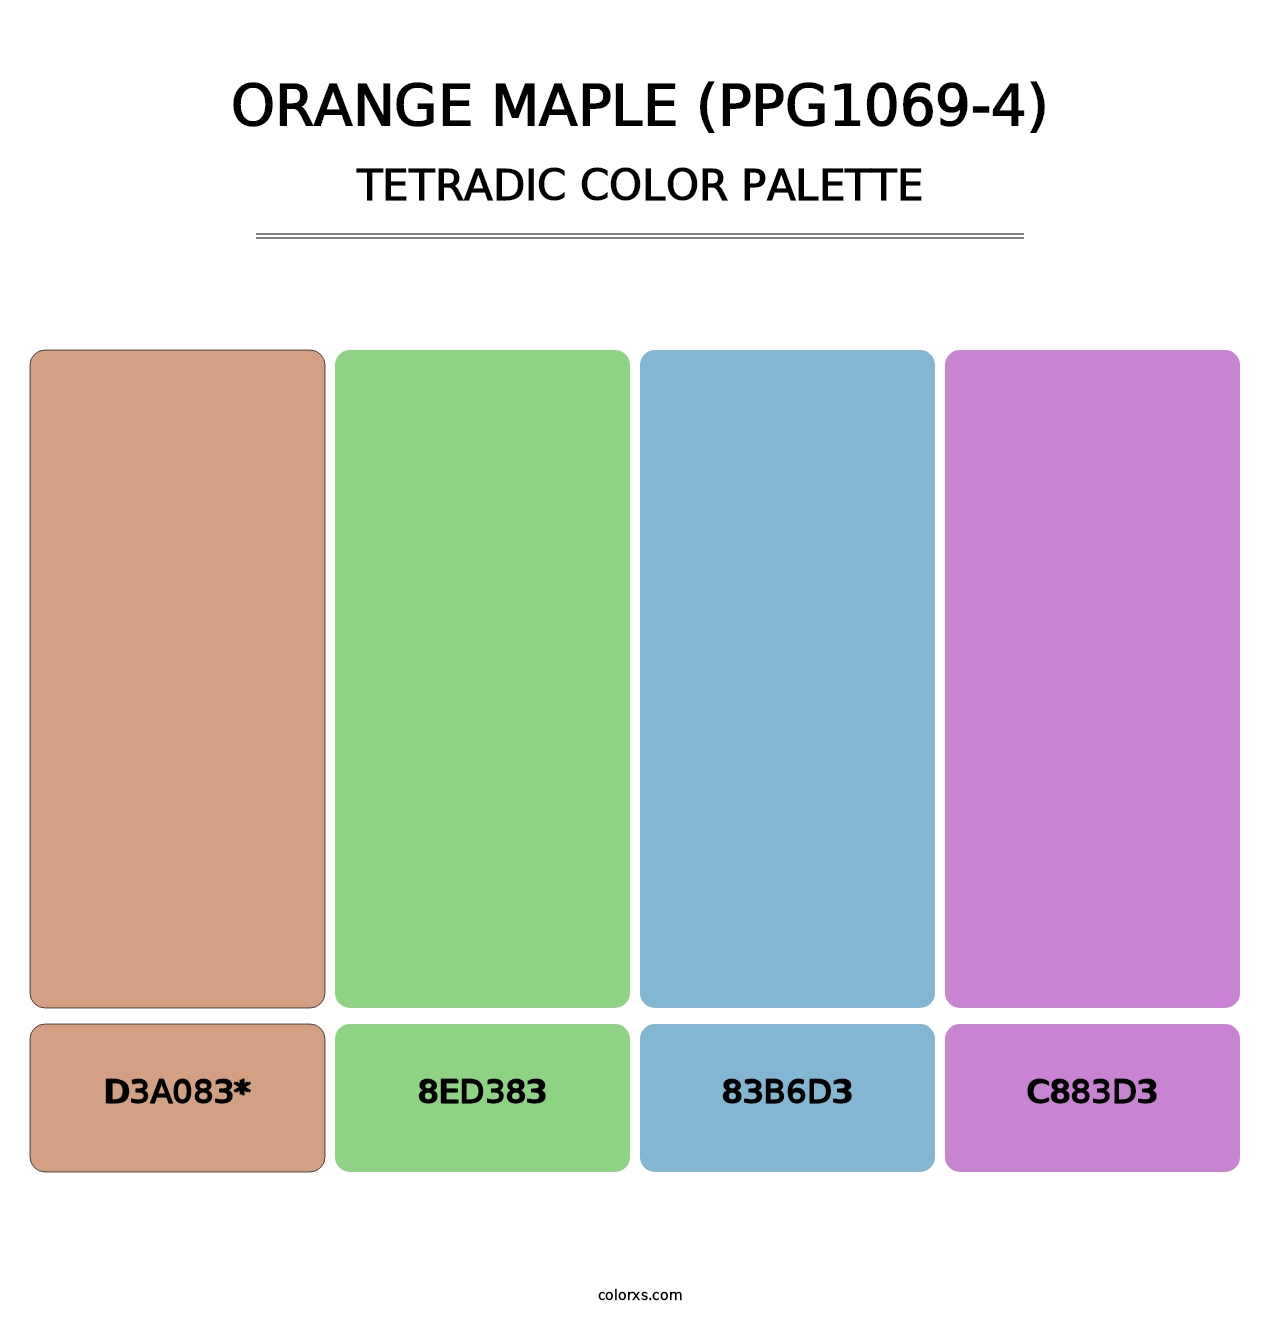 Orange Maple (PPG1069-4) - Tetradic Color Palette